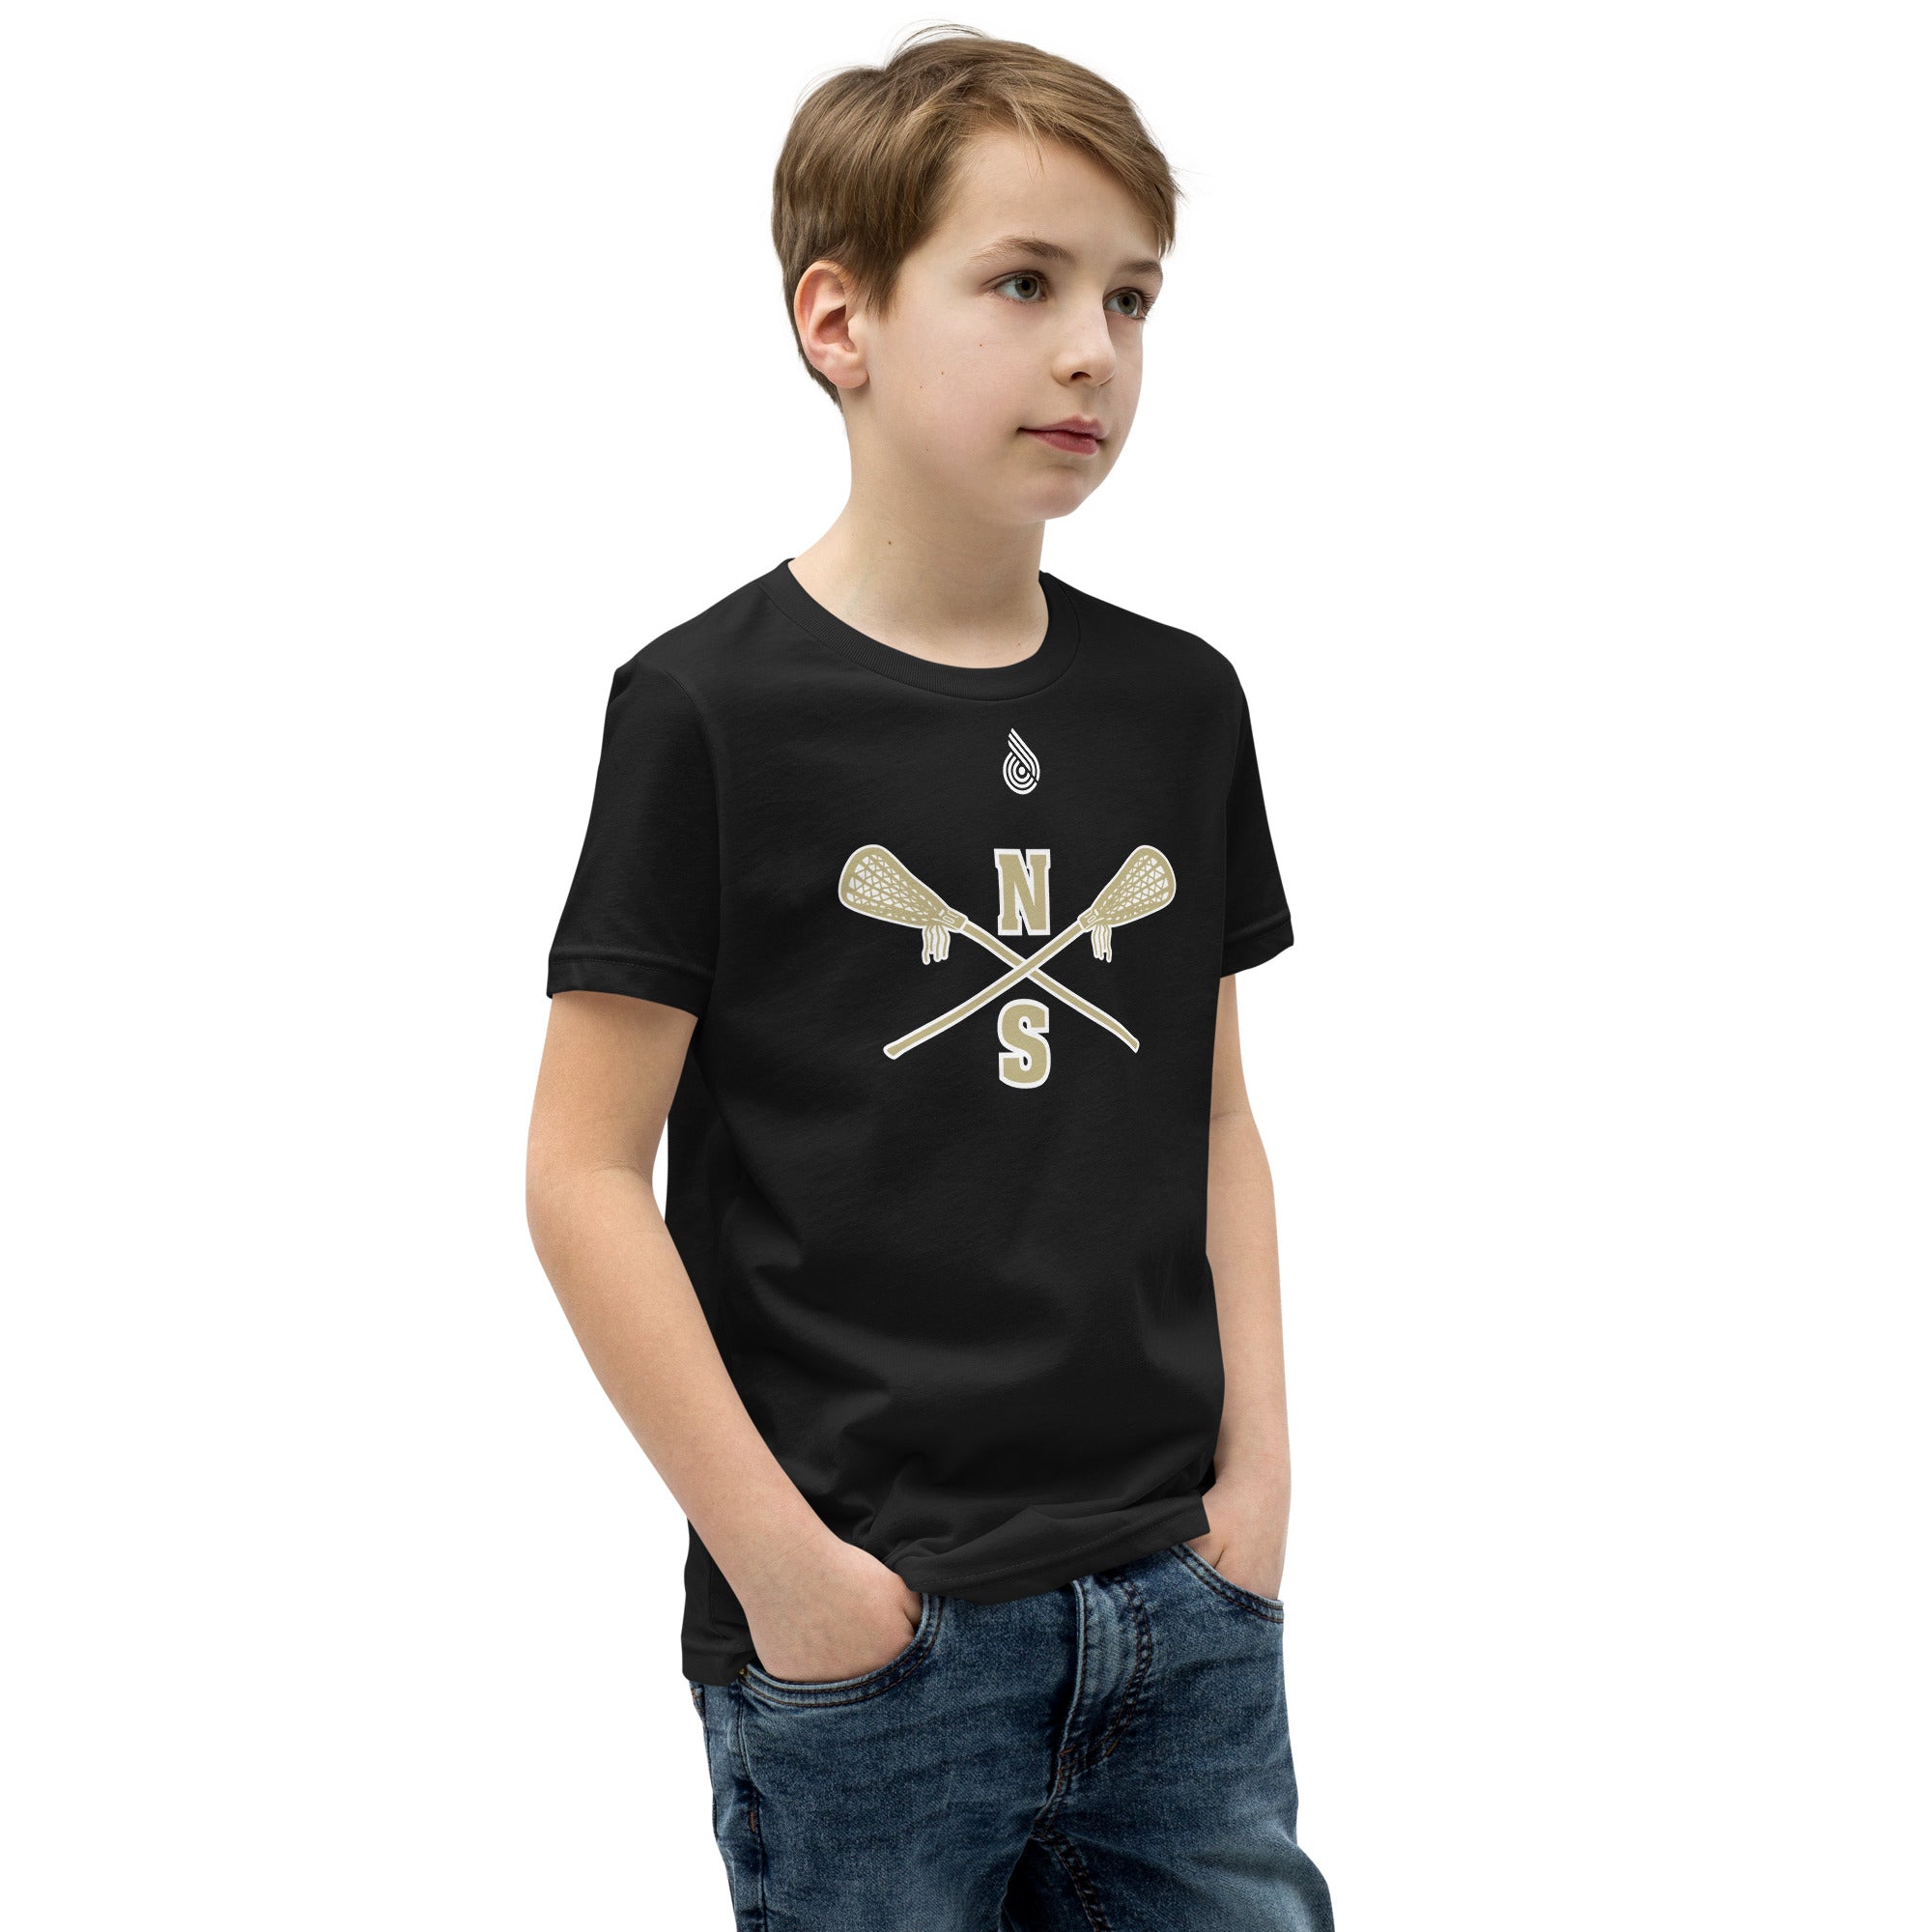 N-S Youth Short Sleeve T-Shirt (Boys Logo)